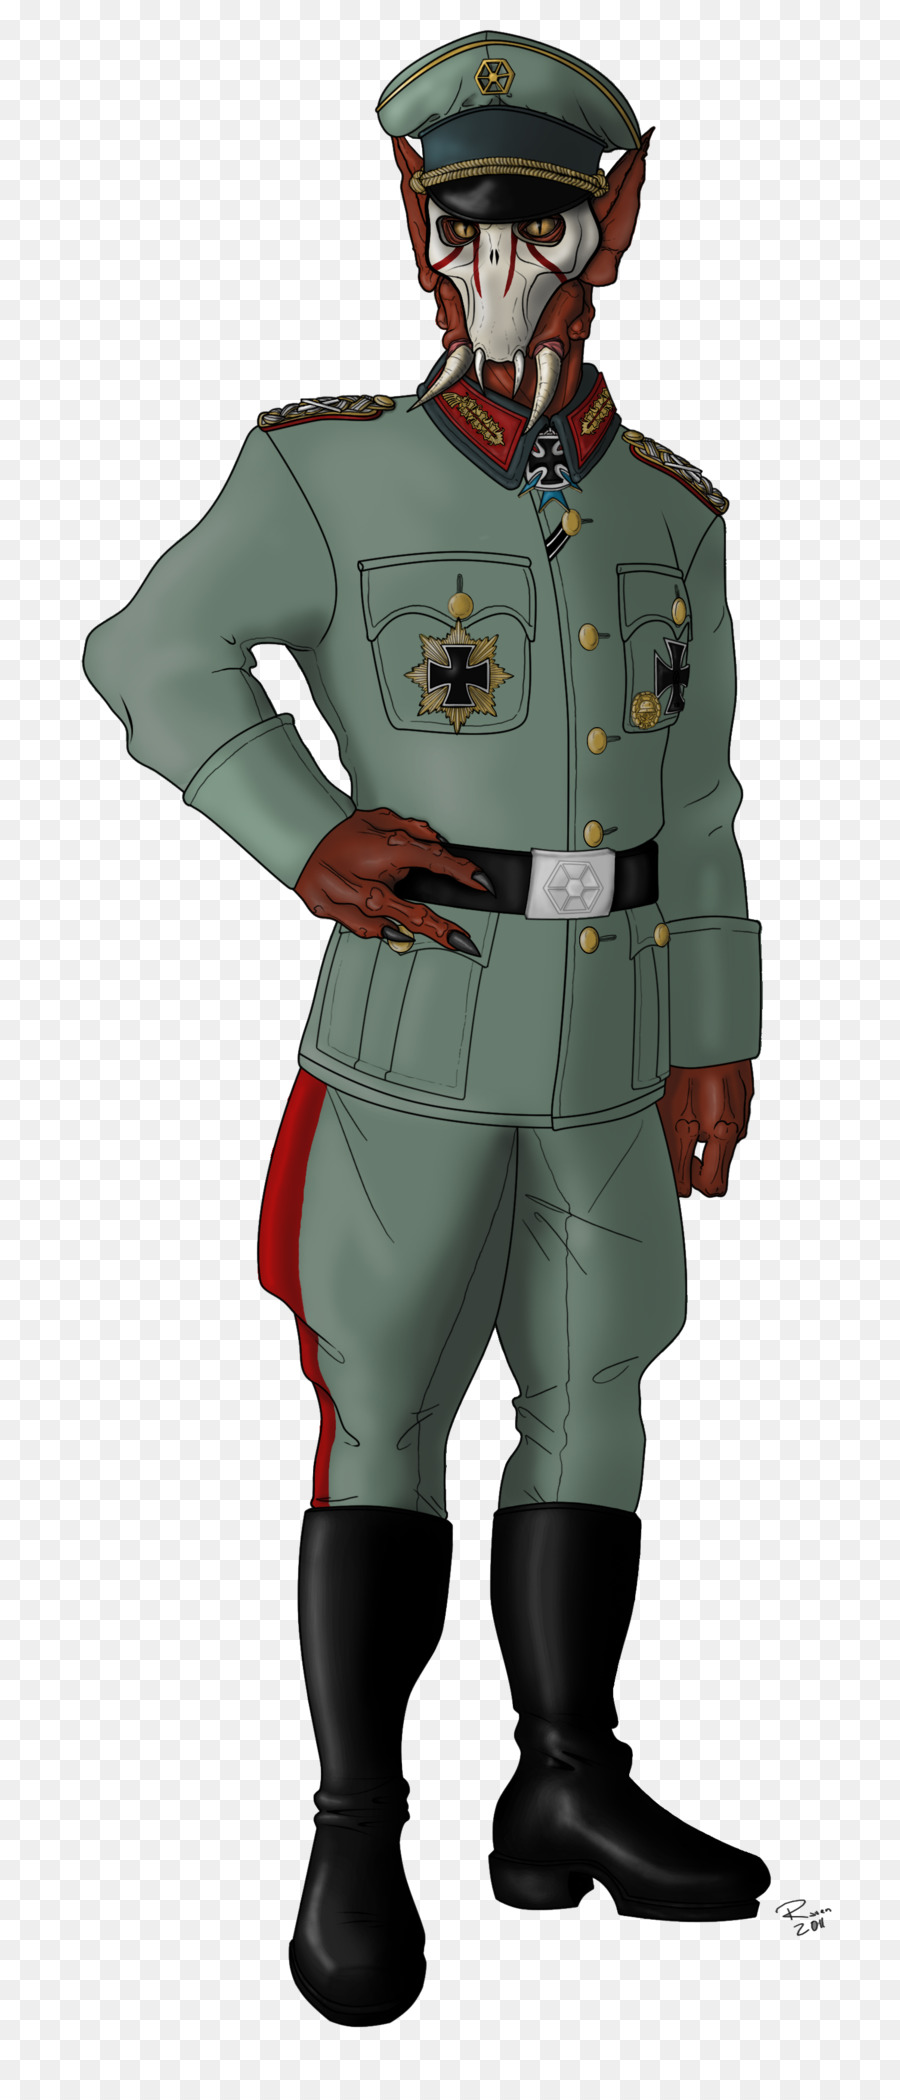 Il generale Grievous Carattere di Fanteria uniforme Militare dei Granatieri - jai